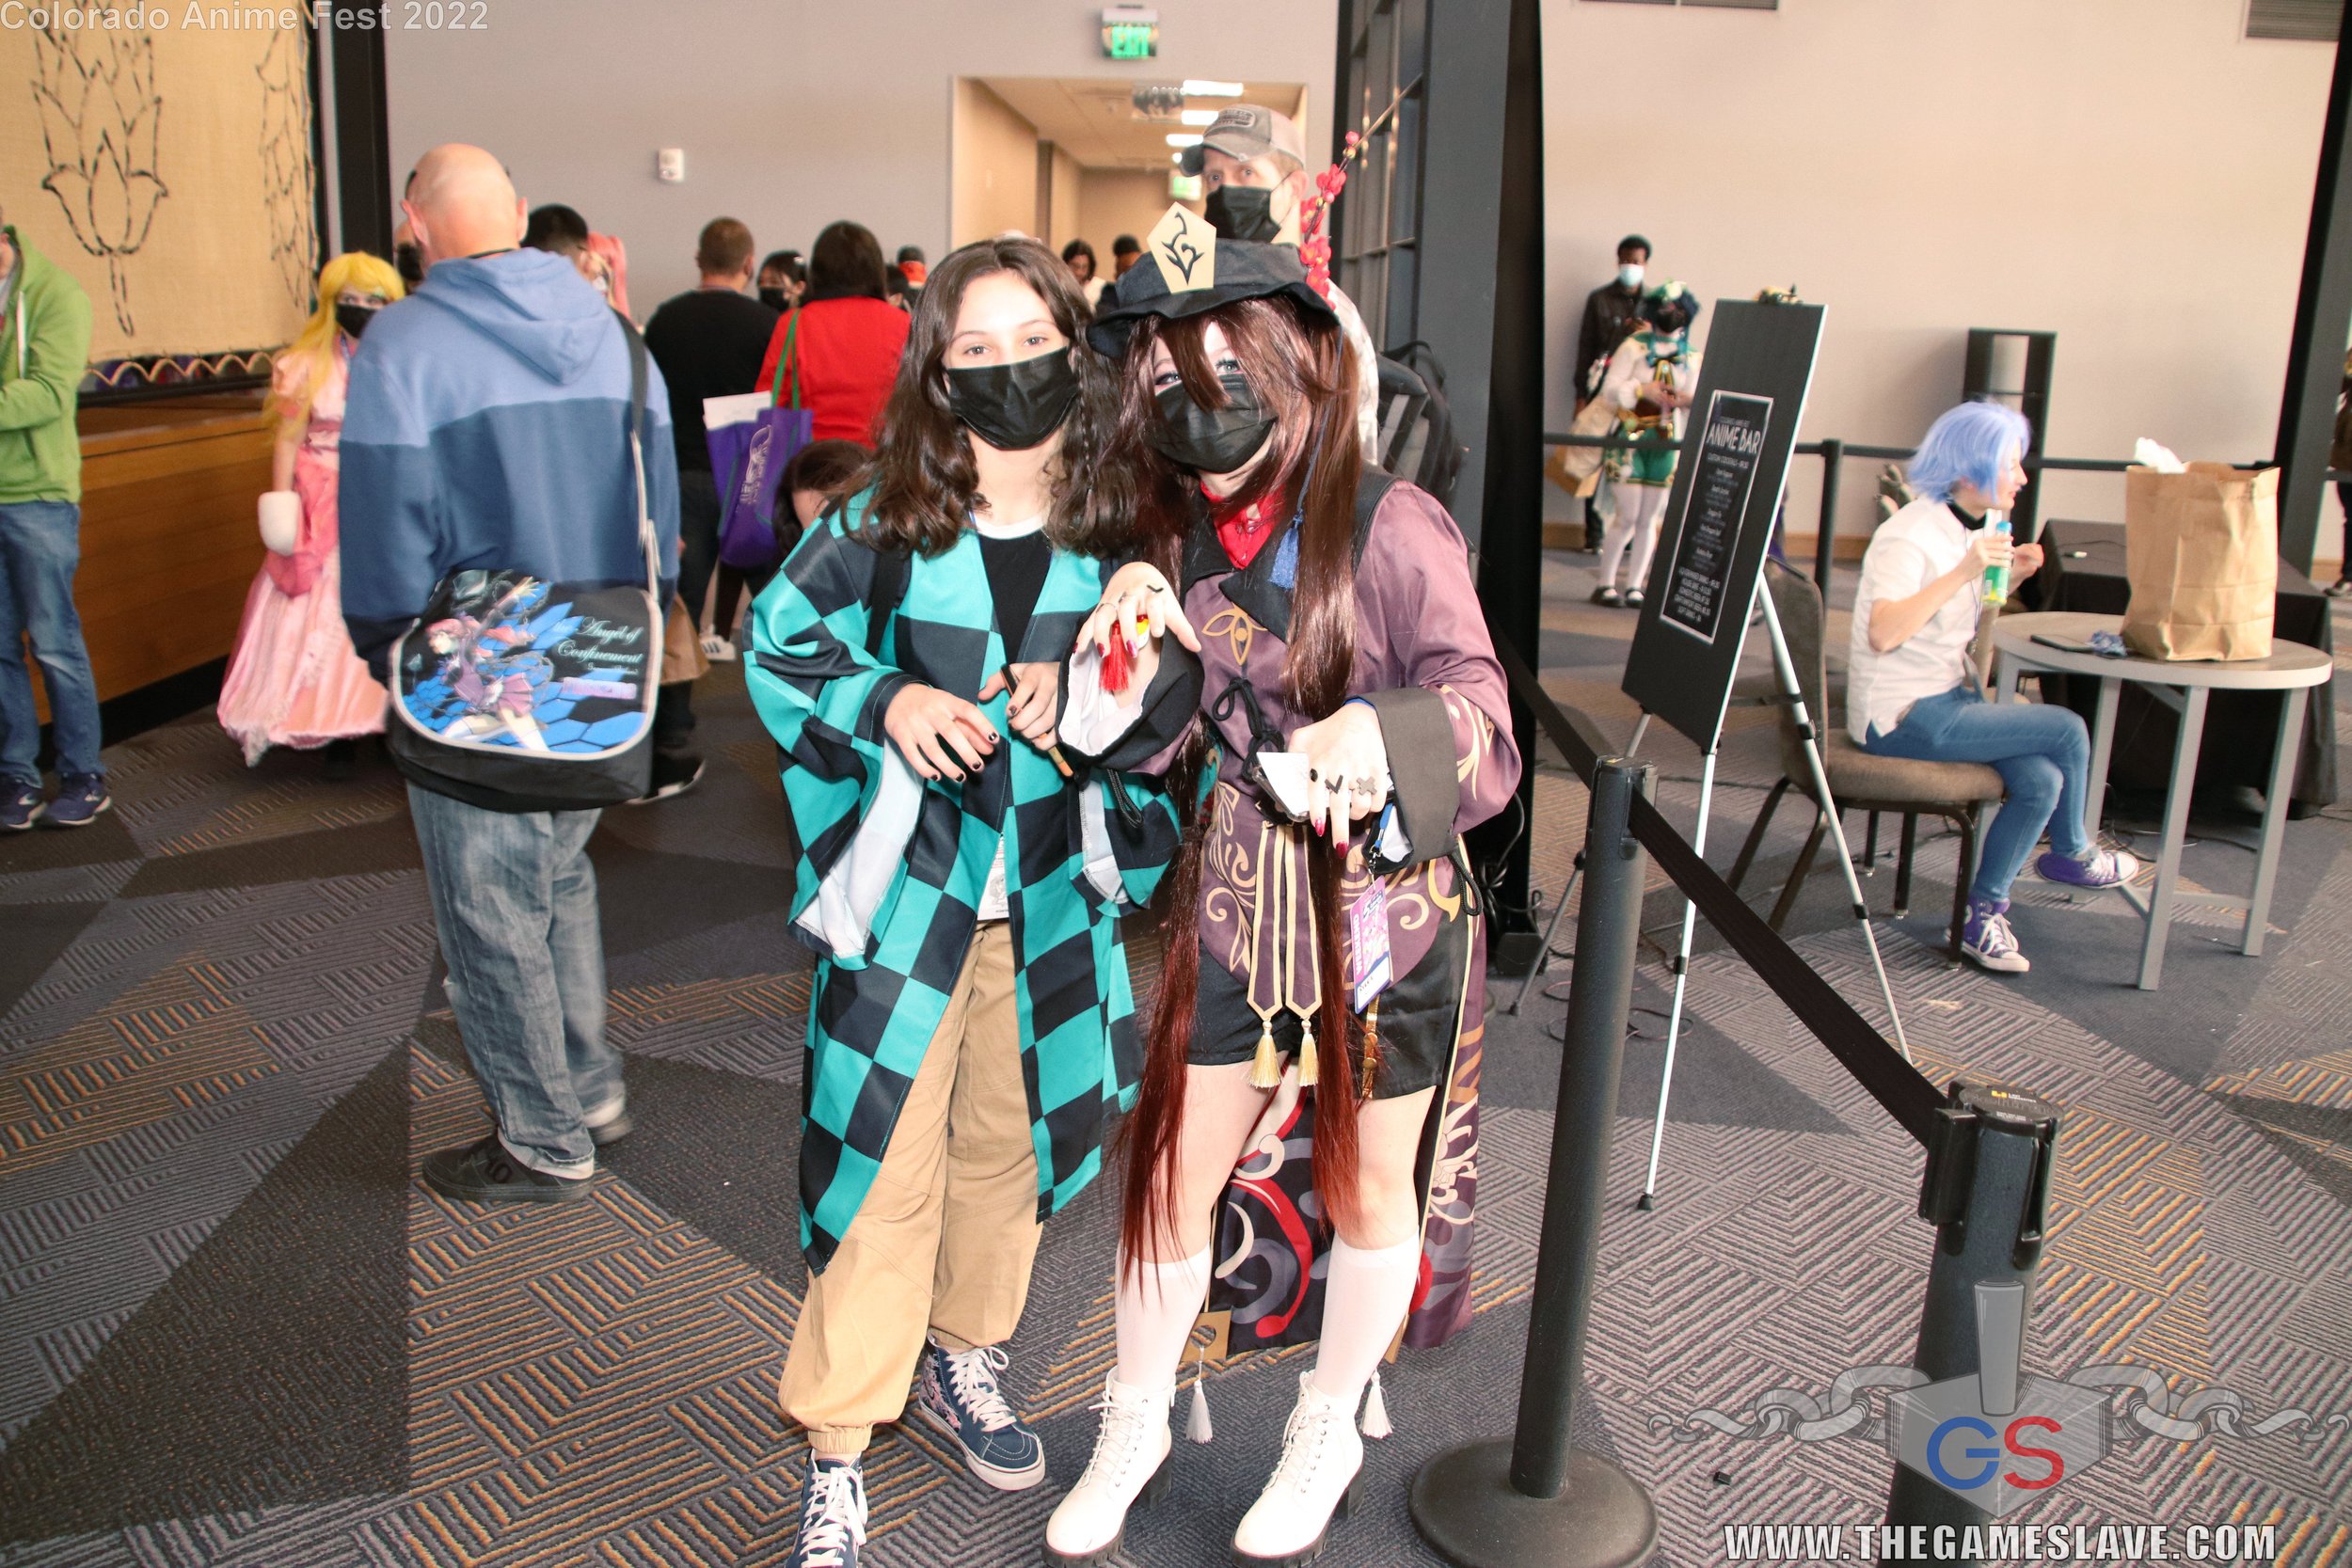 Colorado Anime Fest - Photos from the Floor — The Gameslave